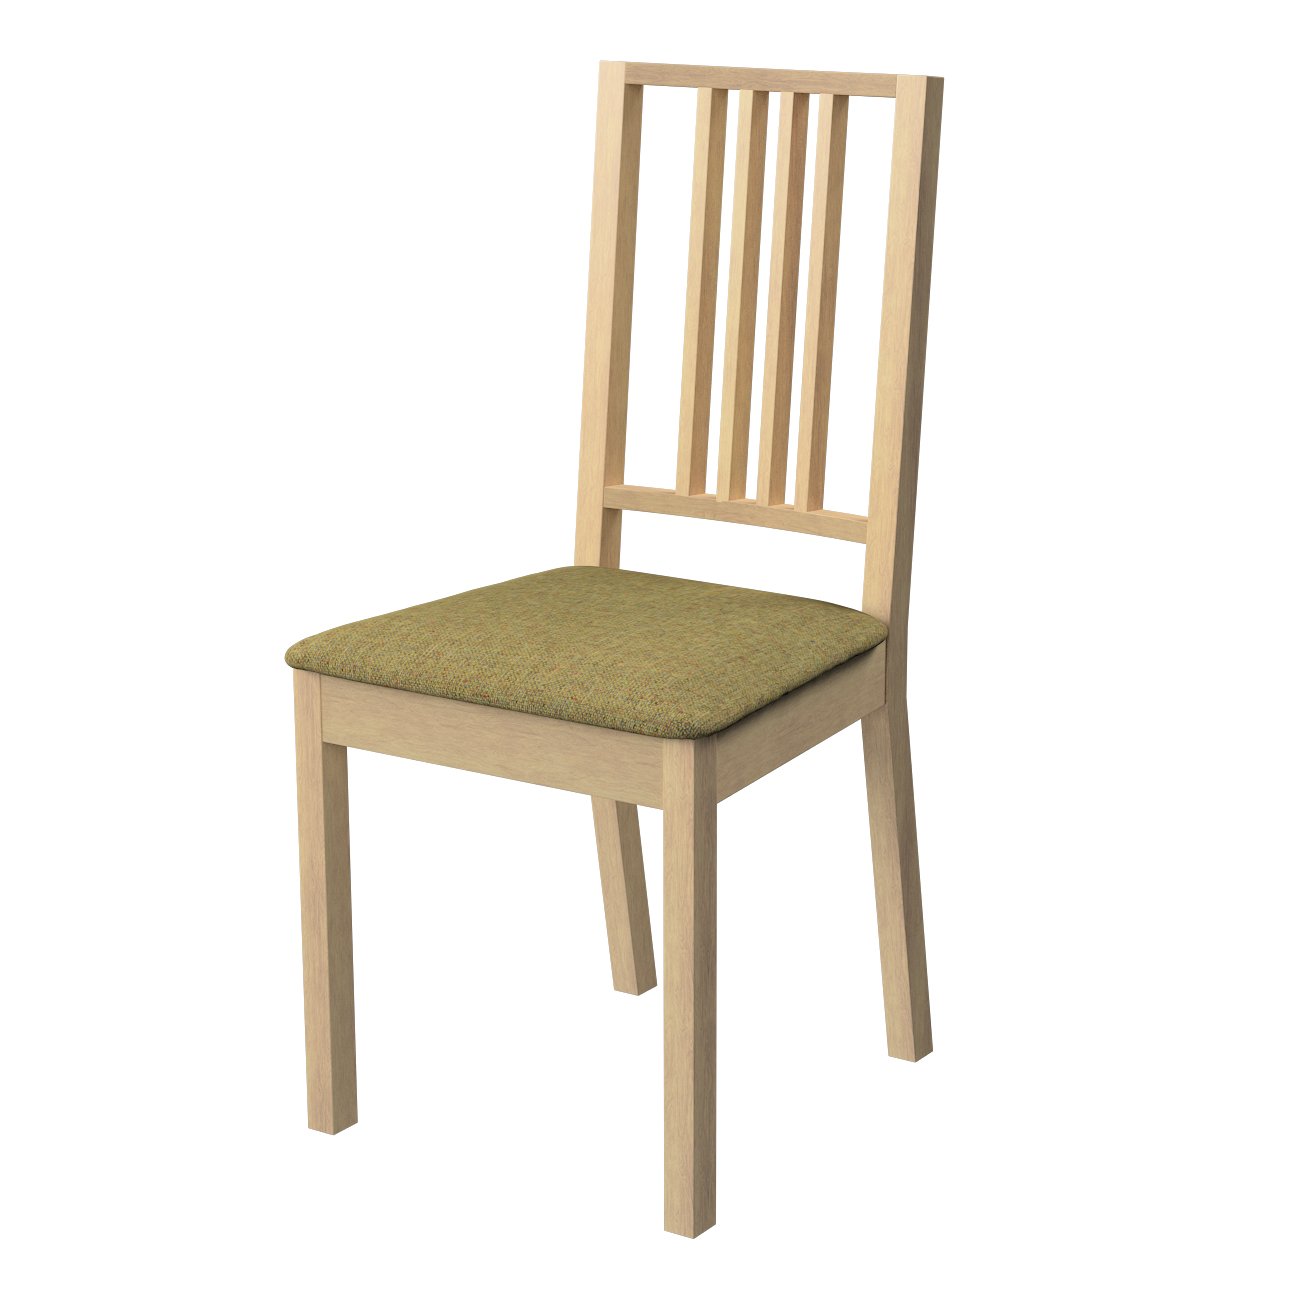 Dekoria Potah na sedák židle Börje, olivová melanž, potah sedák židle Börje, Madrid, 162-34